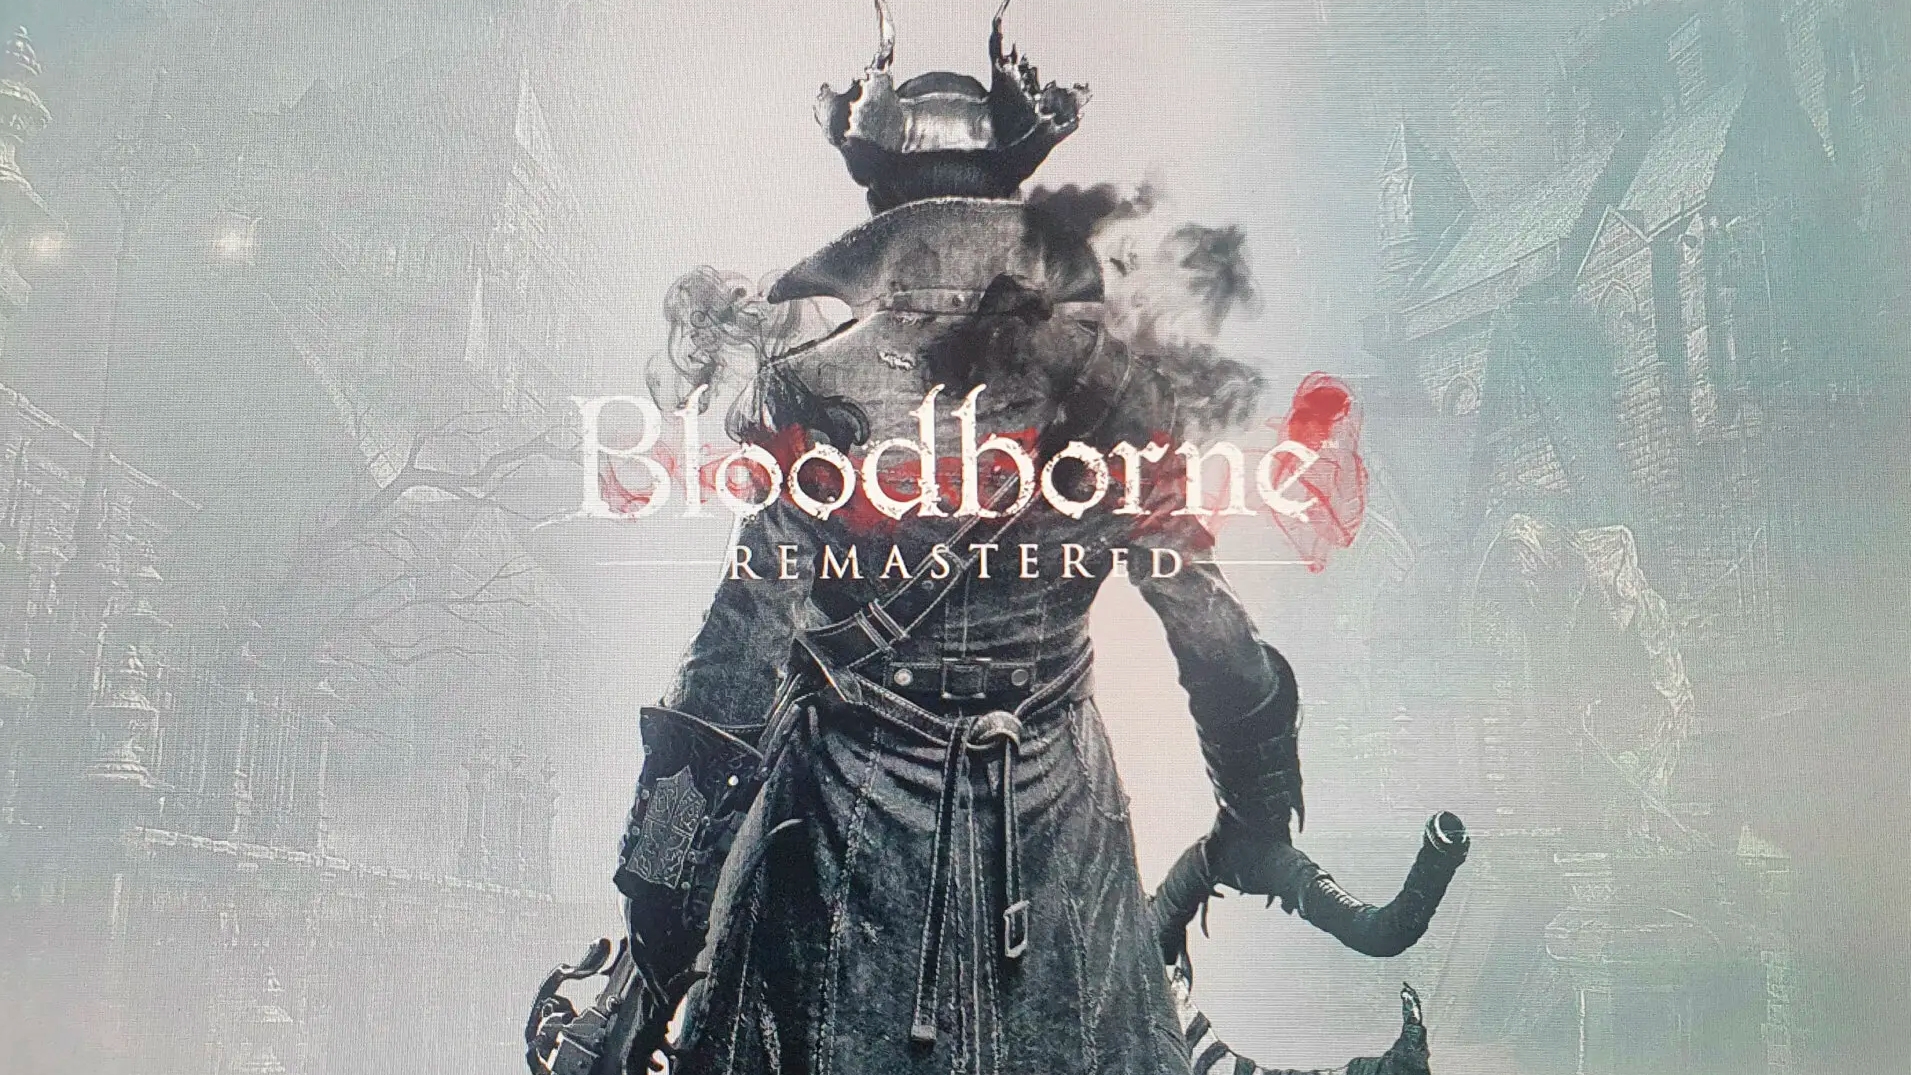 Bloodborne release date confirmed